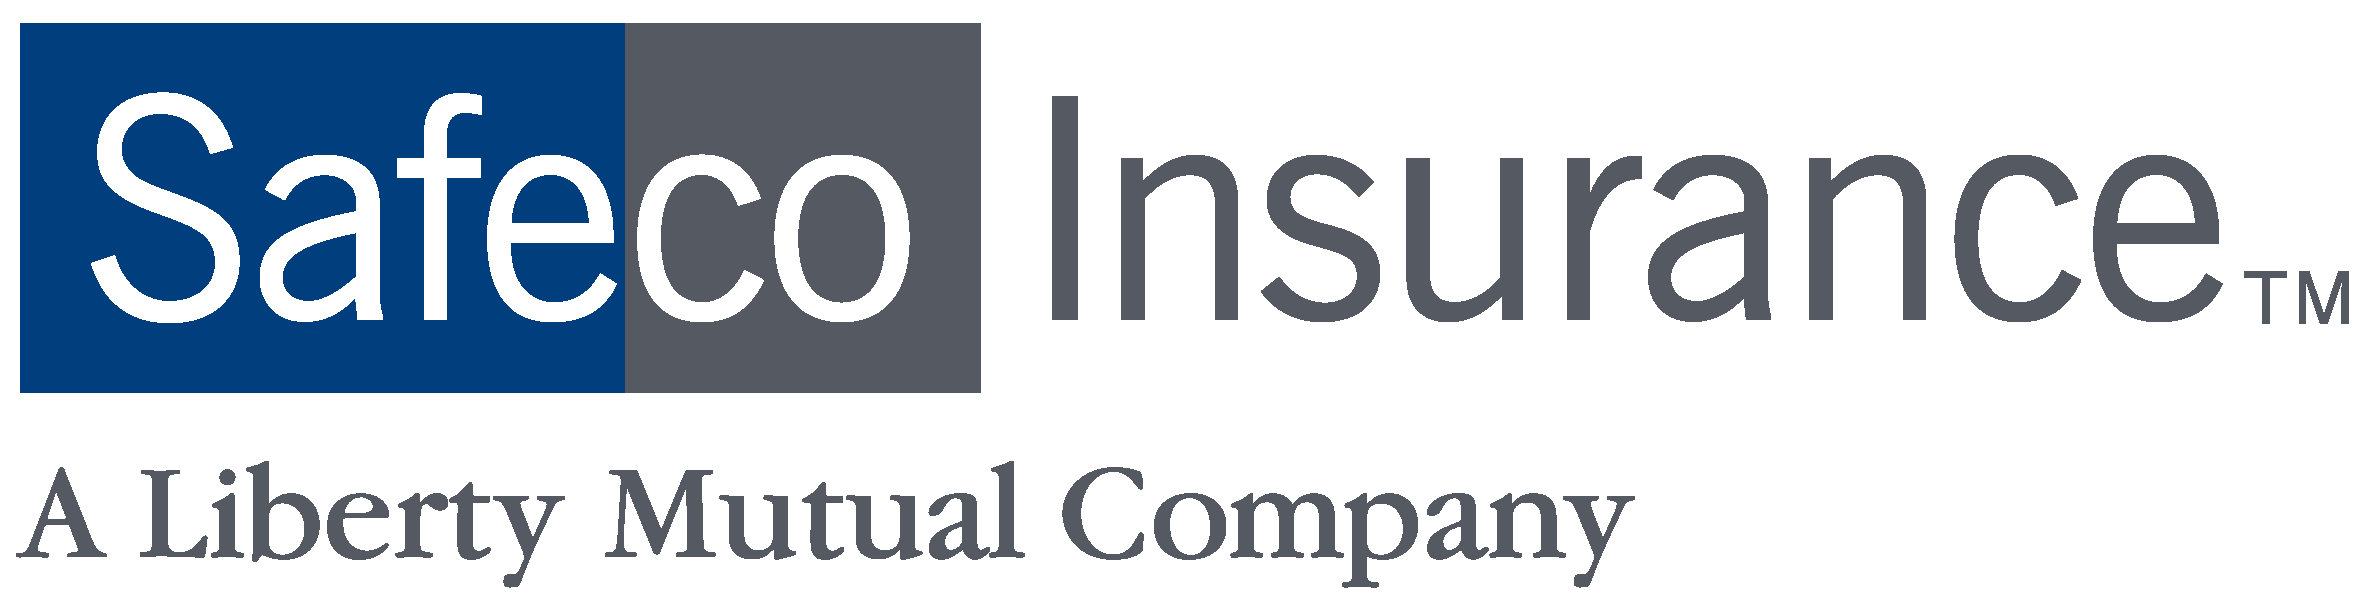 Safeco-insurance-logo